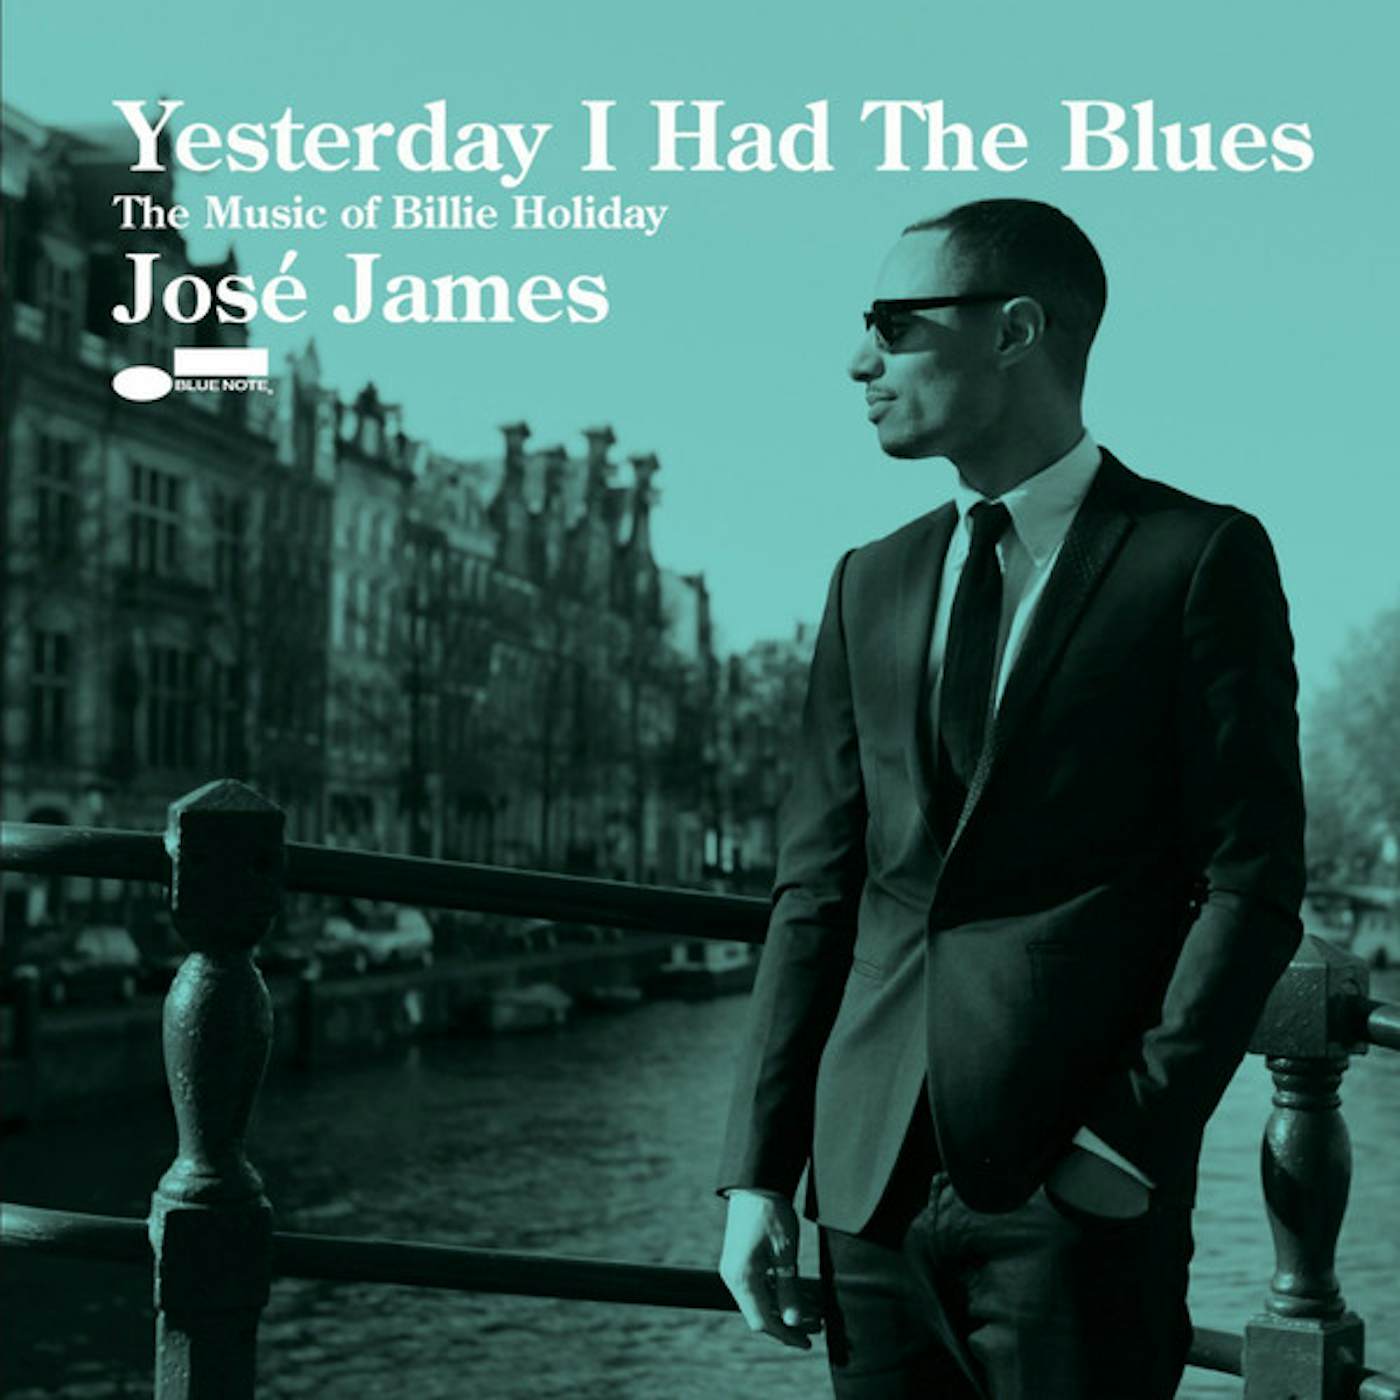 Jose James YESTERDAY I HAD THE BLUES Vinyl Record